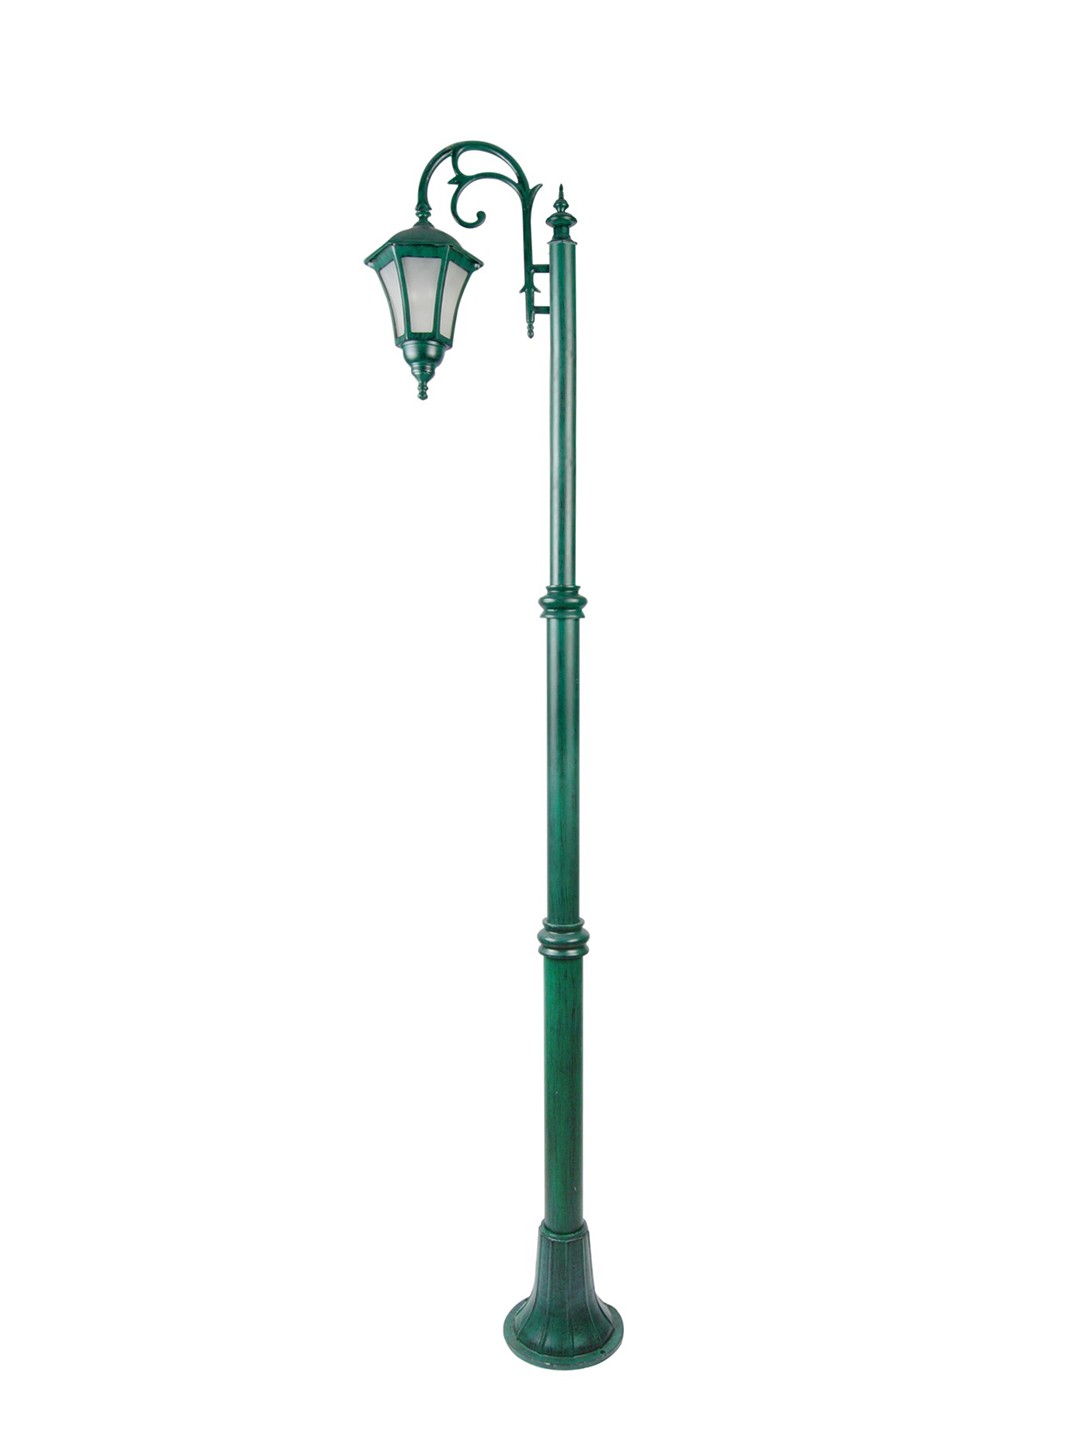 https://materialdepotimages.s3.ap-south-1.amazonaws.com/V000933/po000022-classic-antique-green-single-downward-lamp-pole-light-15-w-fos-lighting-lighting/po000022-classic-antique-green-single-downward-lamp-pole-light-15-w/1.jpg